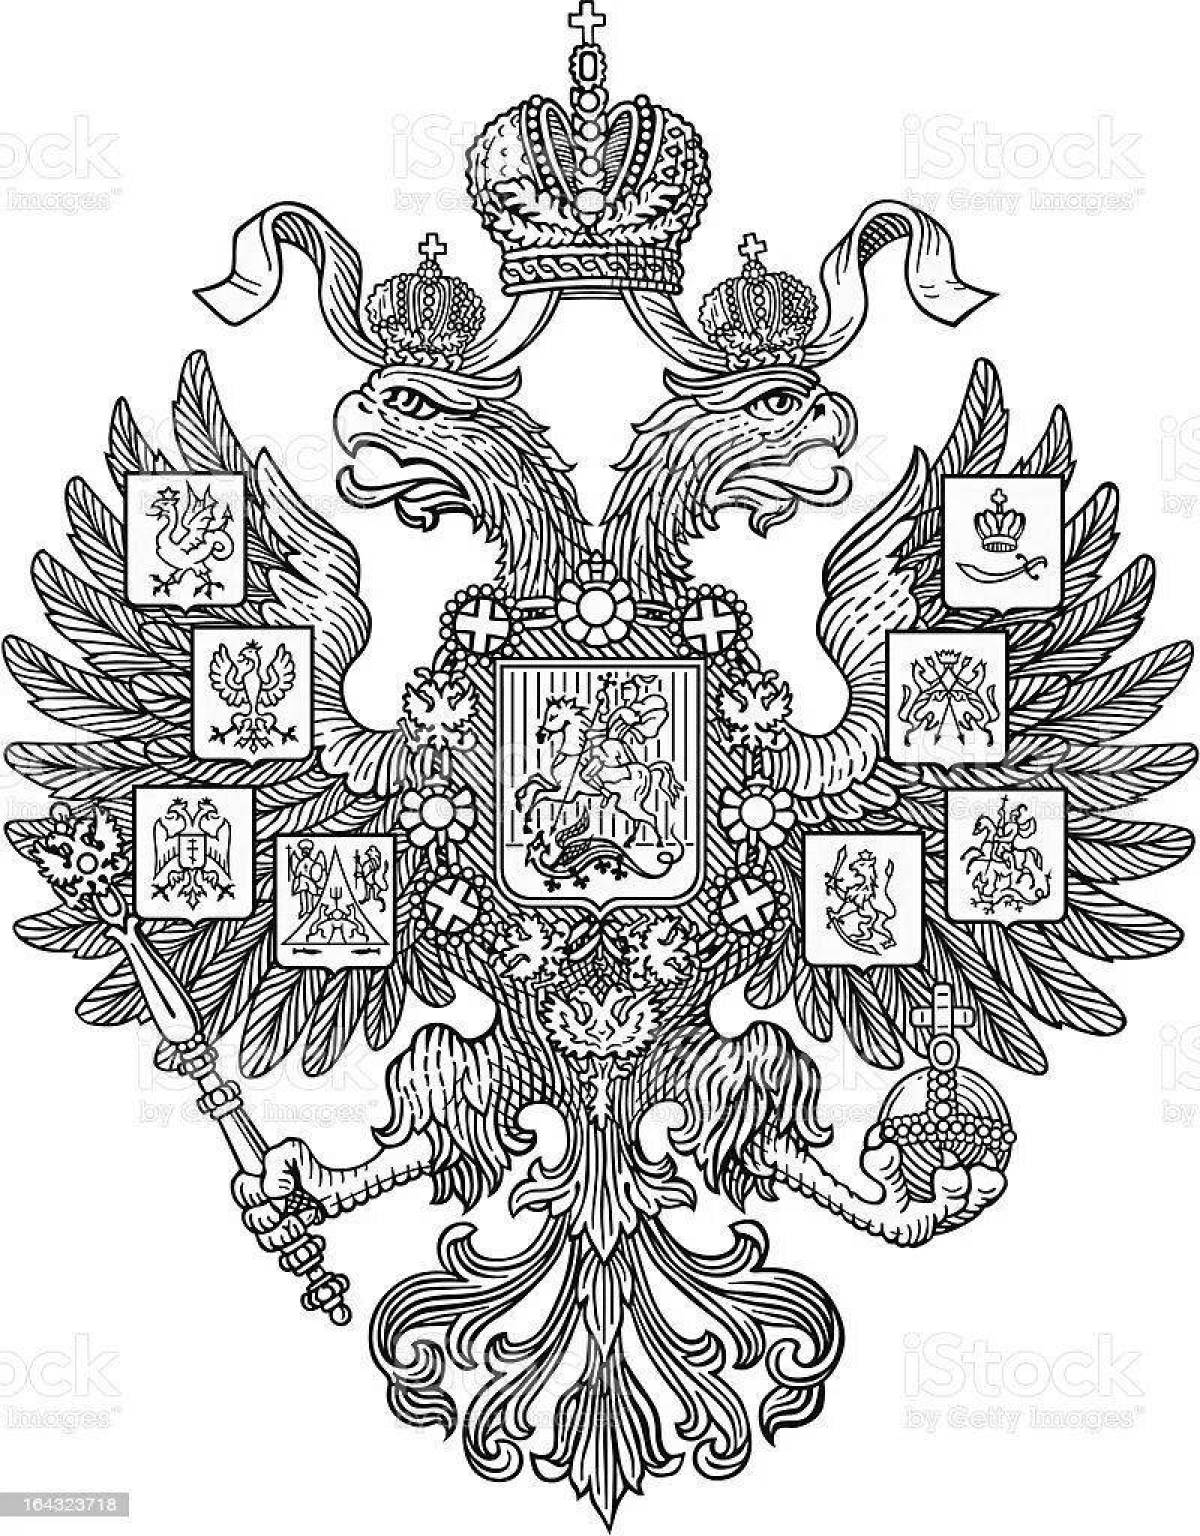 Ornate Russian Empire coloring page